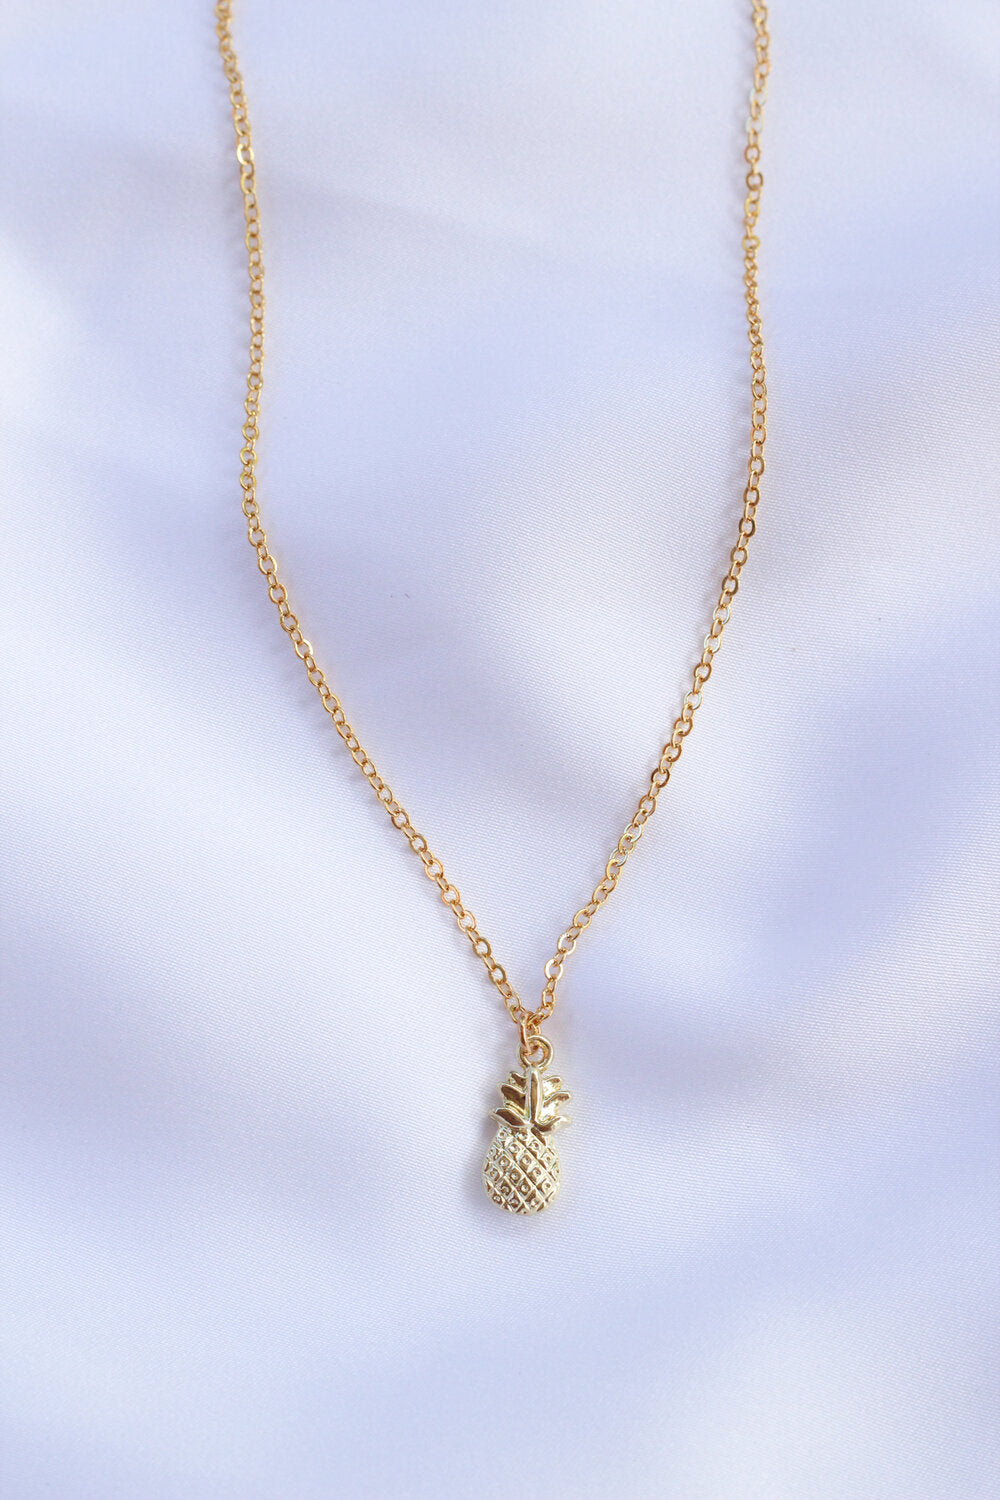 Petite Pineapple necklace